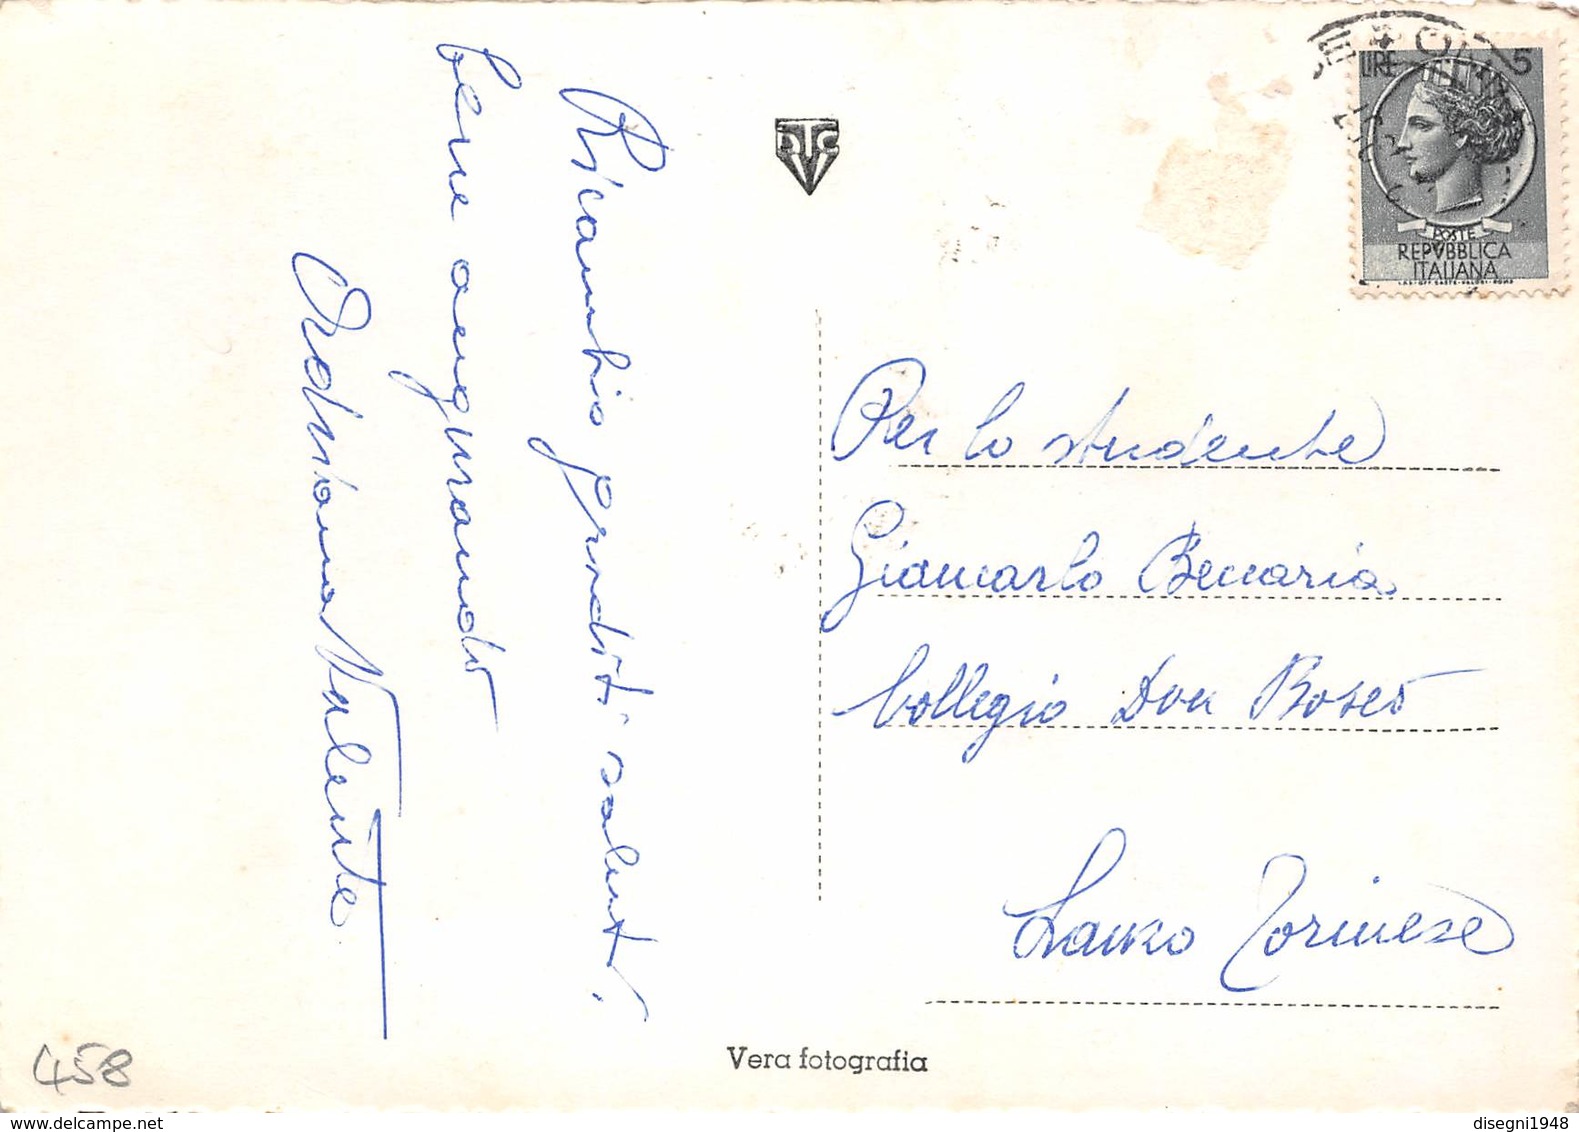 M09055 "TORINO E LE SUE CHIESE"5 VEDUTE - CART. ILLUSTR. ORIG. SPED.1957 - Kirchen